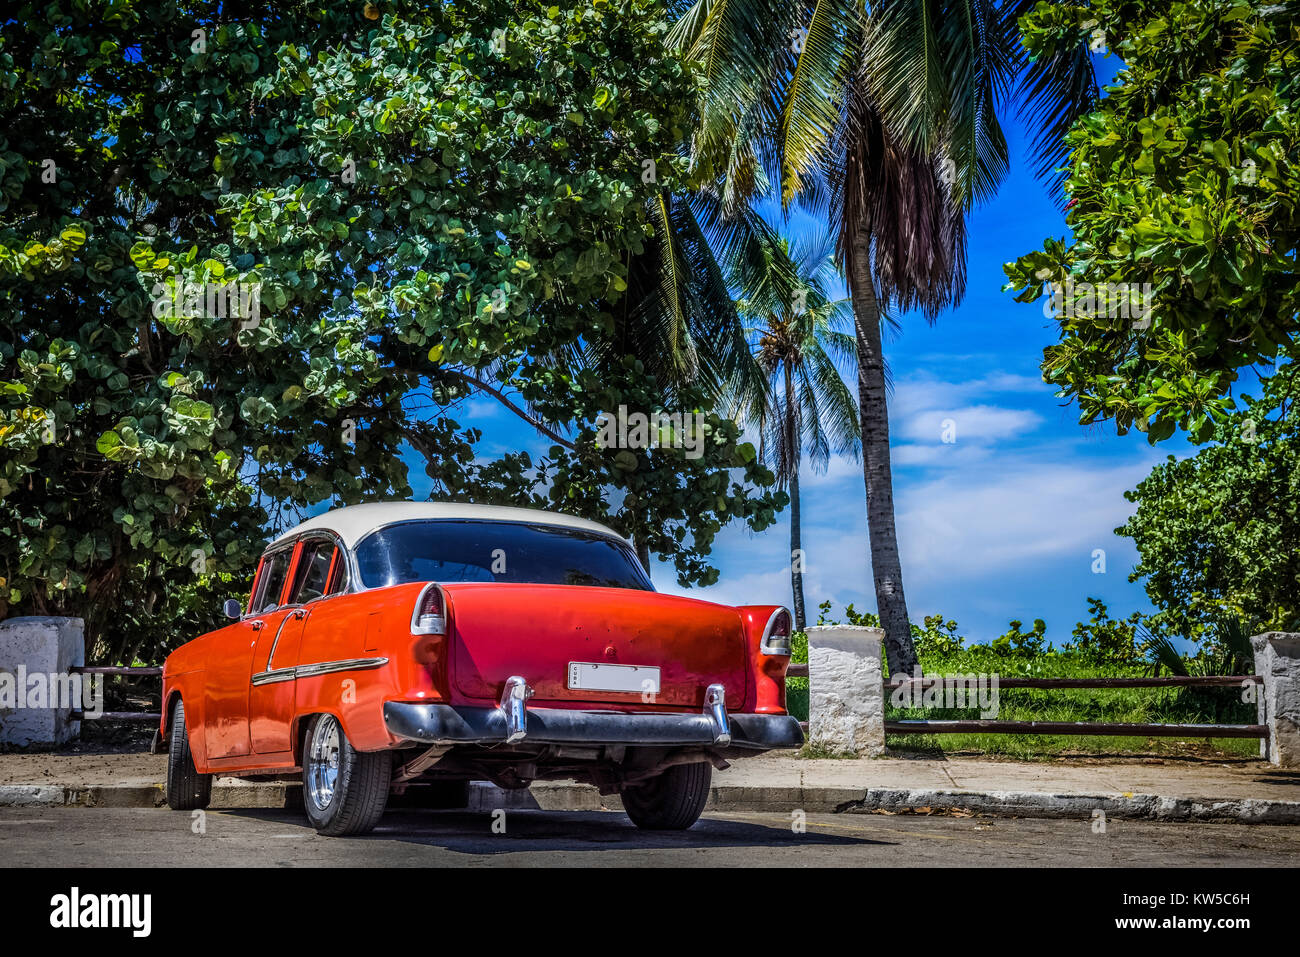 Amerikanischer rot weisser Chevrolet Oldtimer parkt am Strand in Varadero Cuba - Serie Cuba Reportage Stock Photo